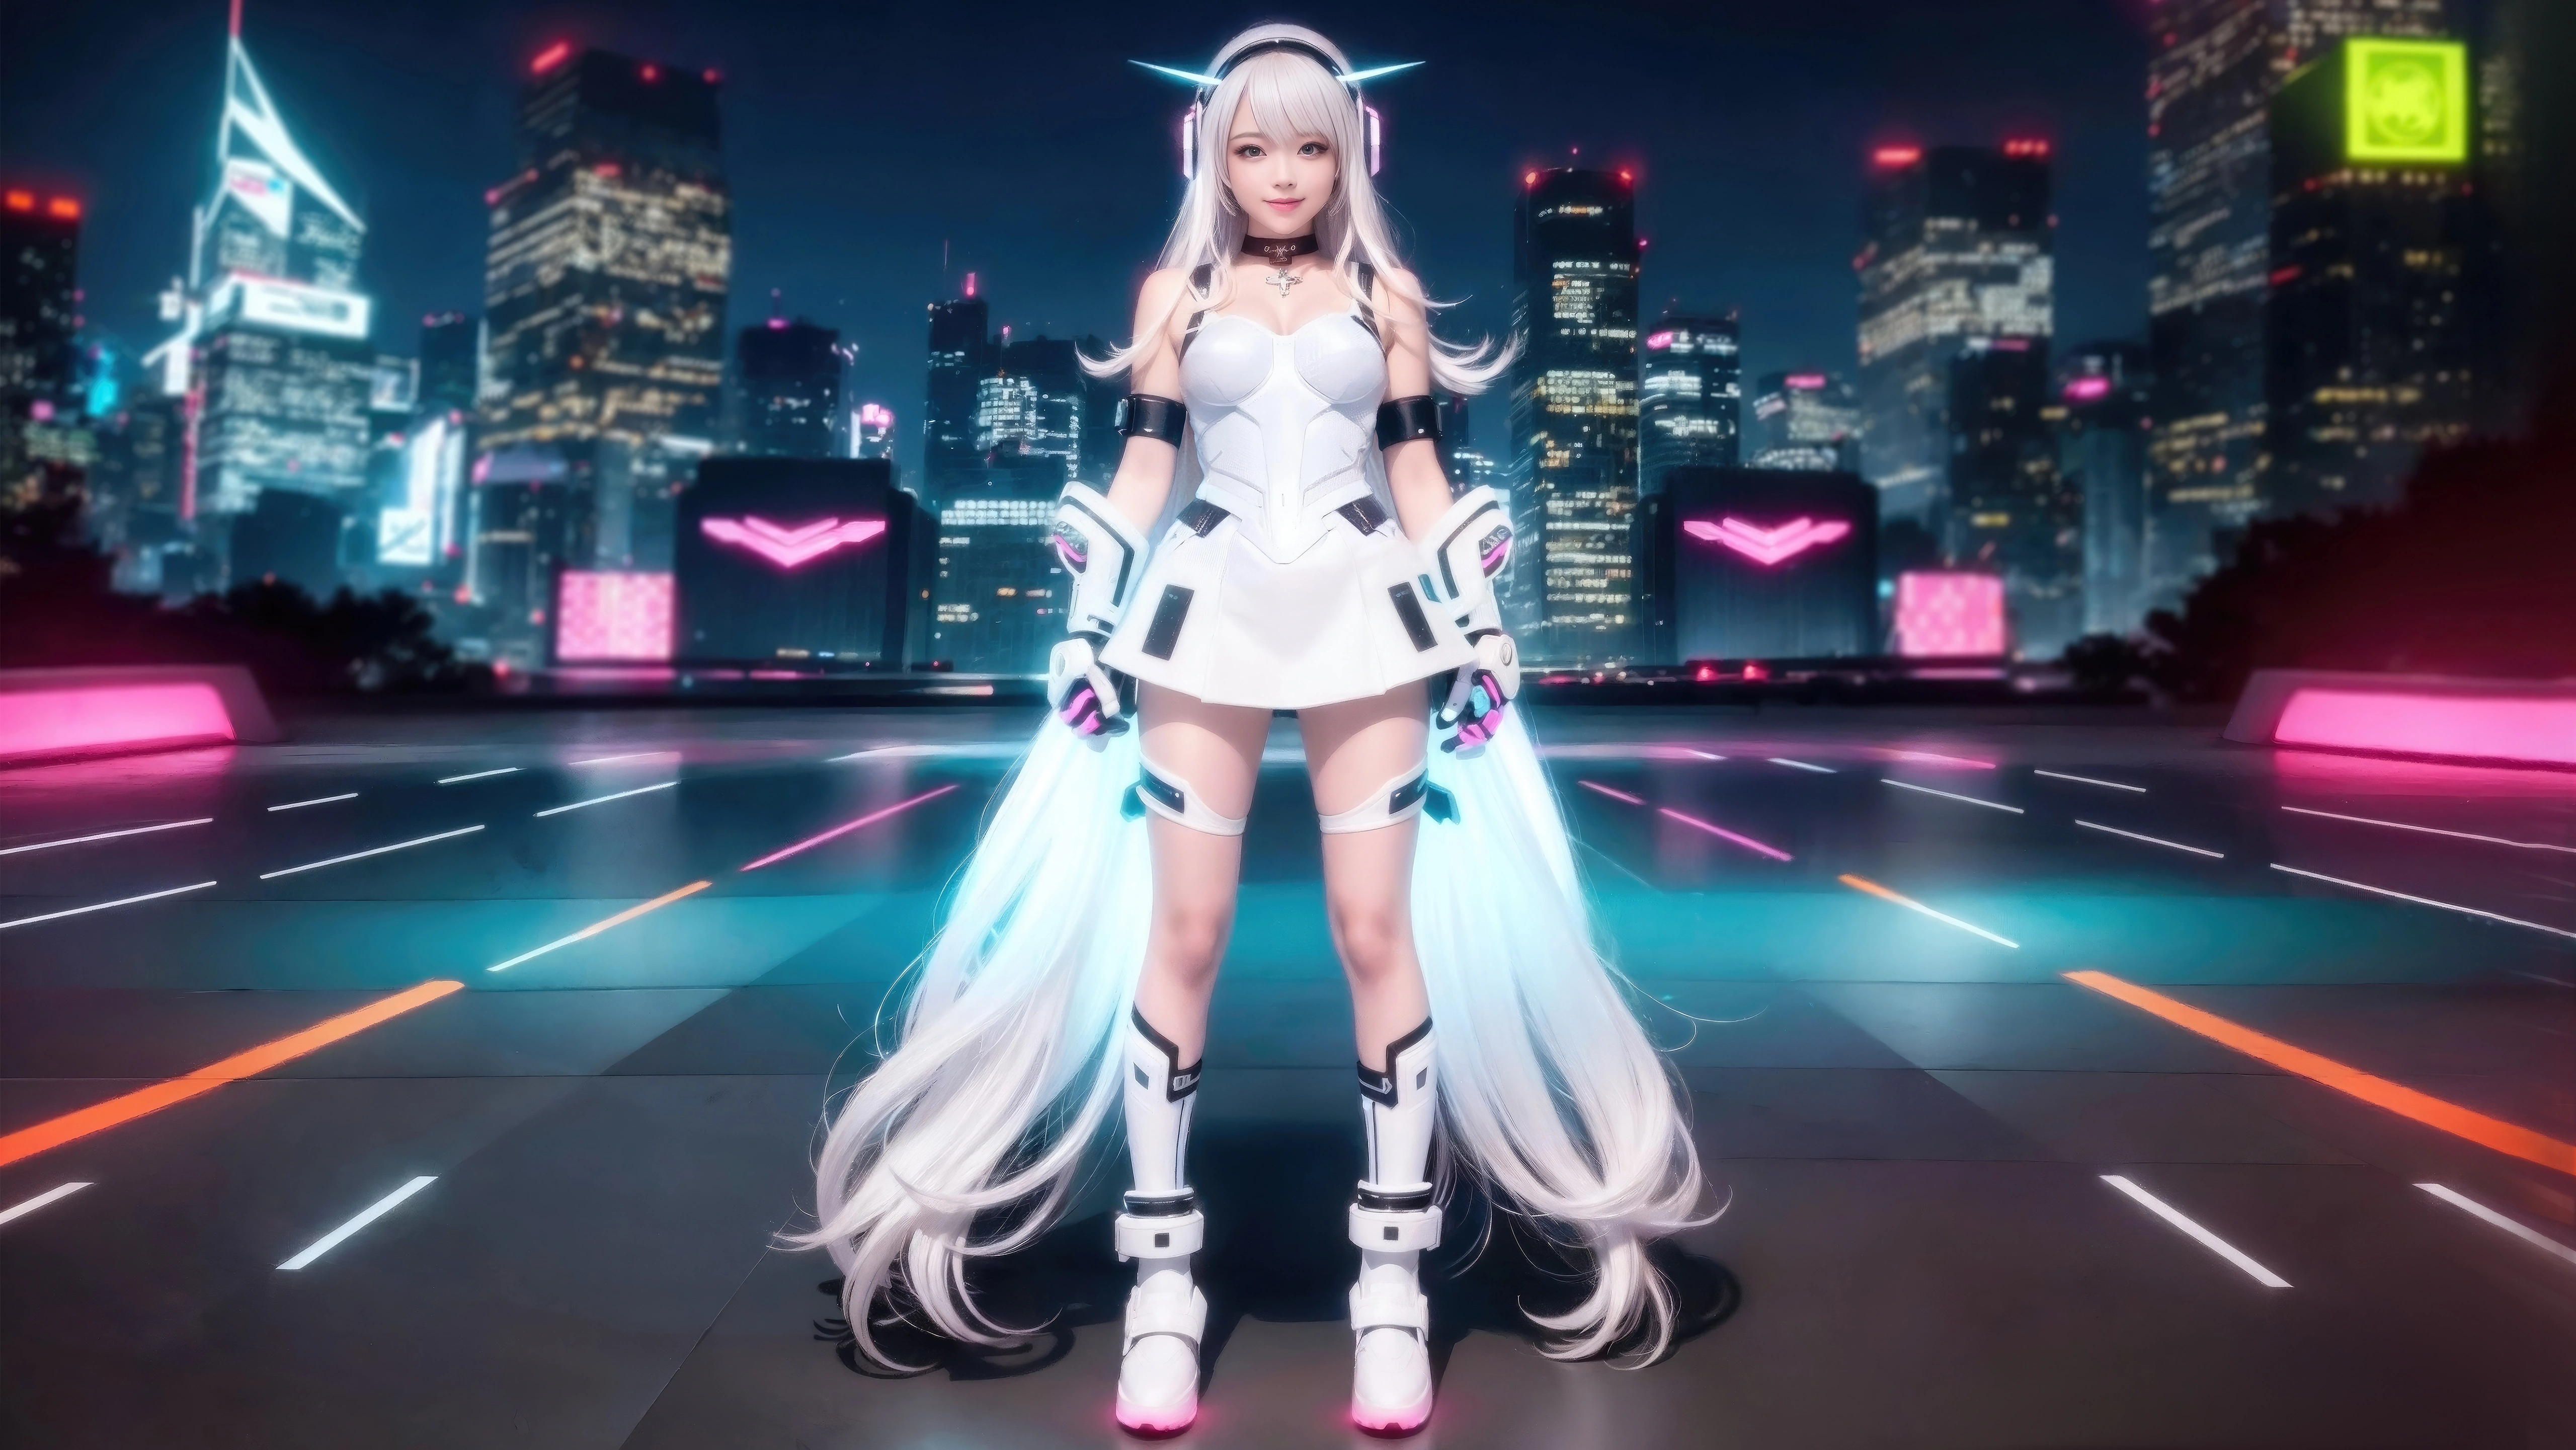 asian cyber girl city lights armor character l5.jpg